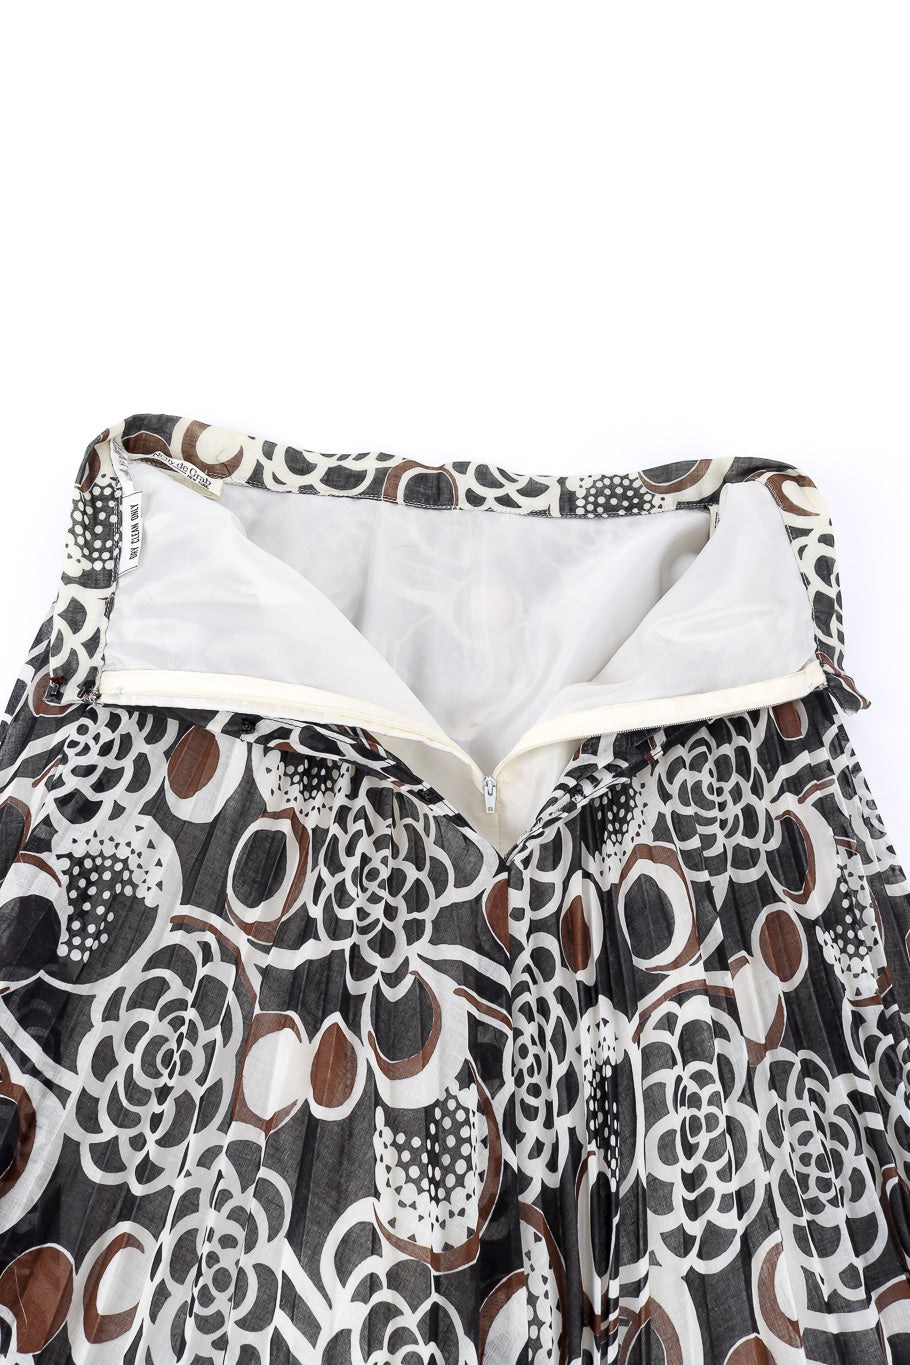 Vintage Nelly de Grab Abstract Dot Print Blouse & Skirt Set skirt unzipped closeup @Recessla